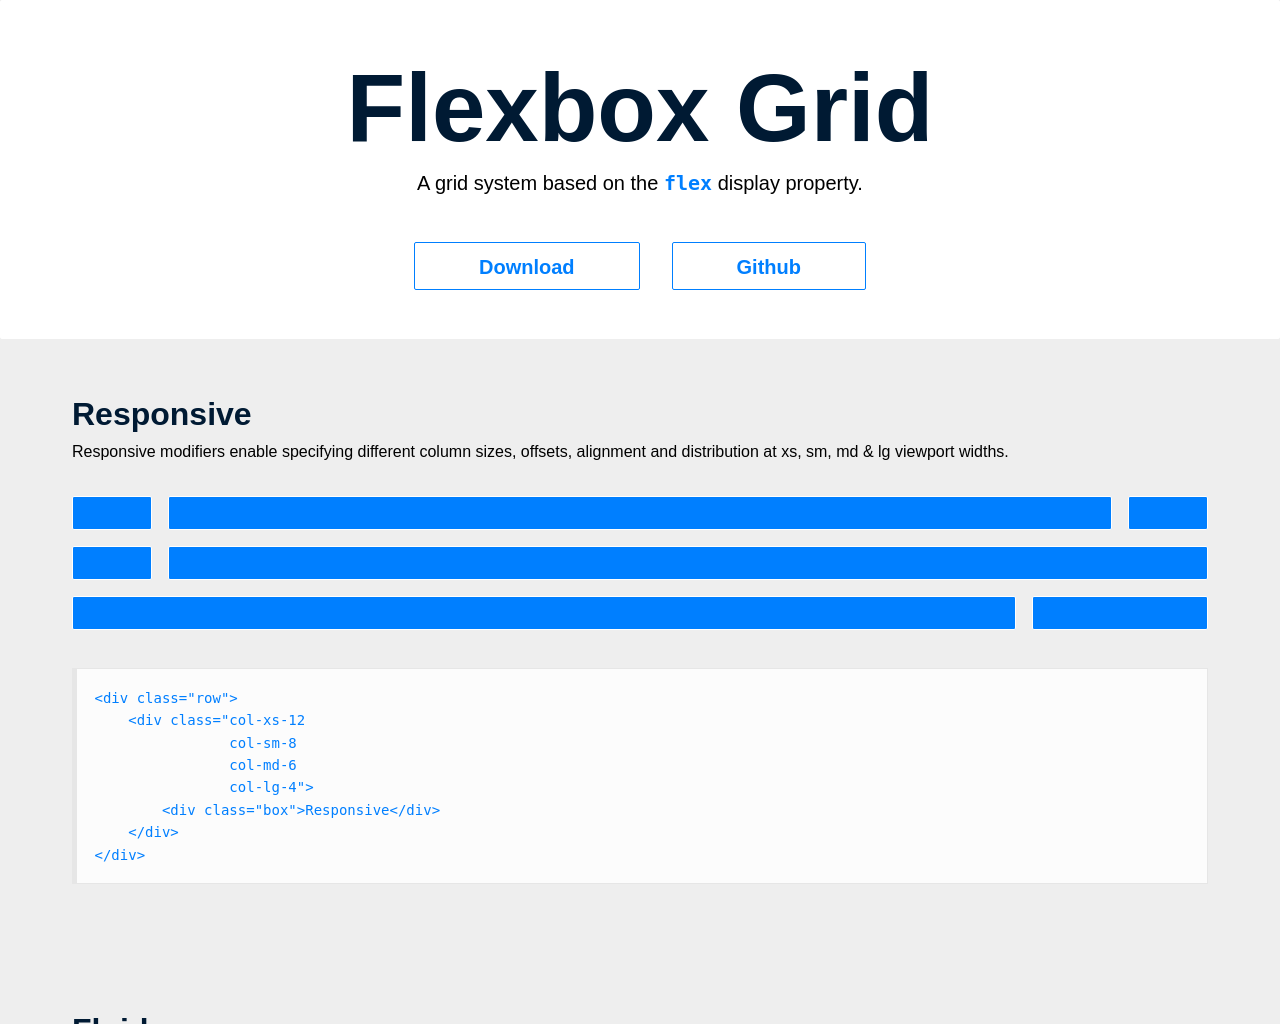 flexboxgrid.com